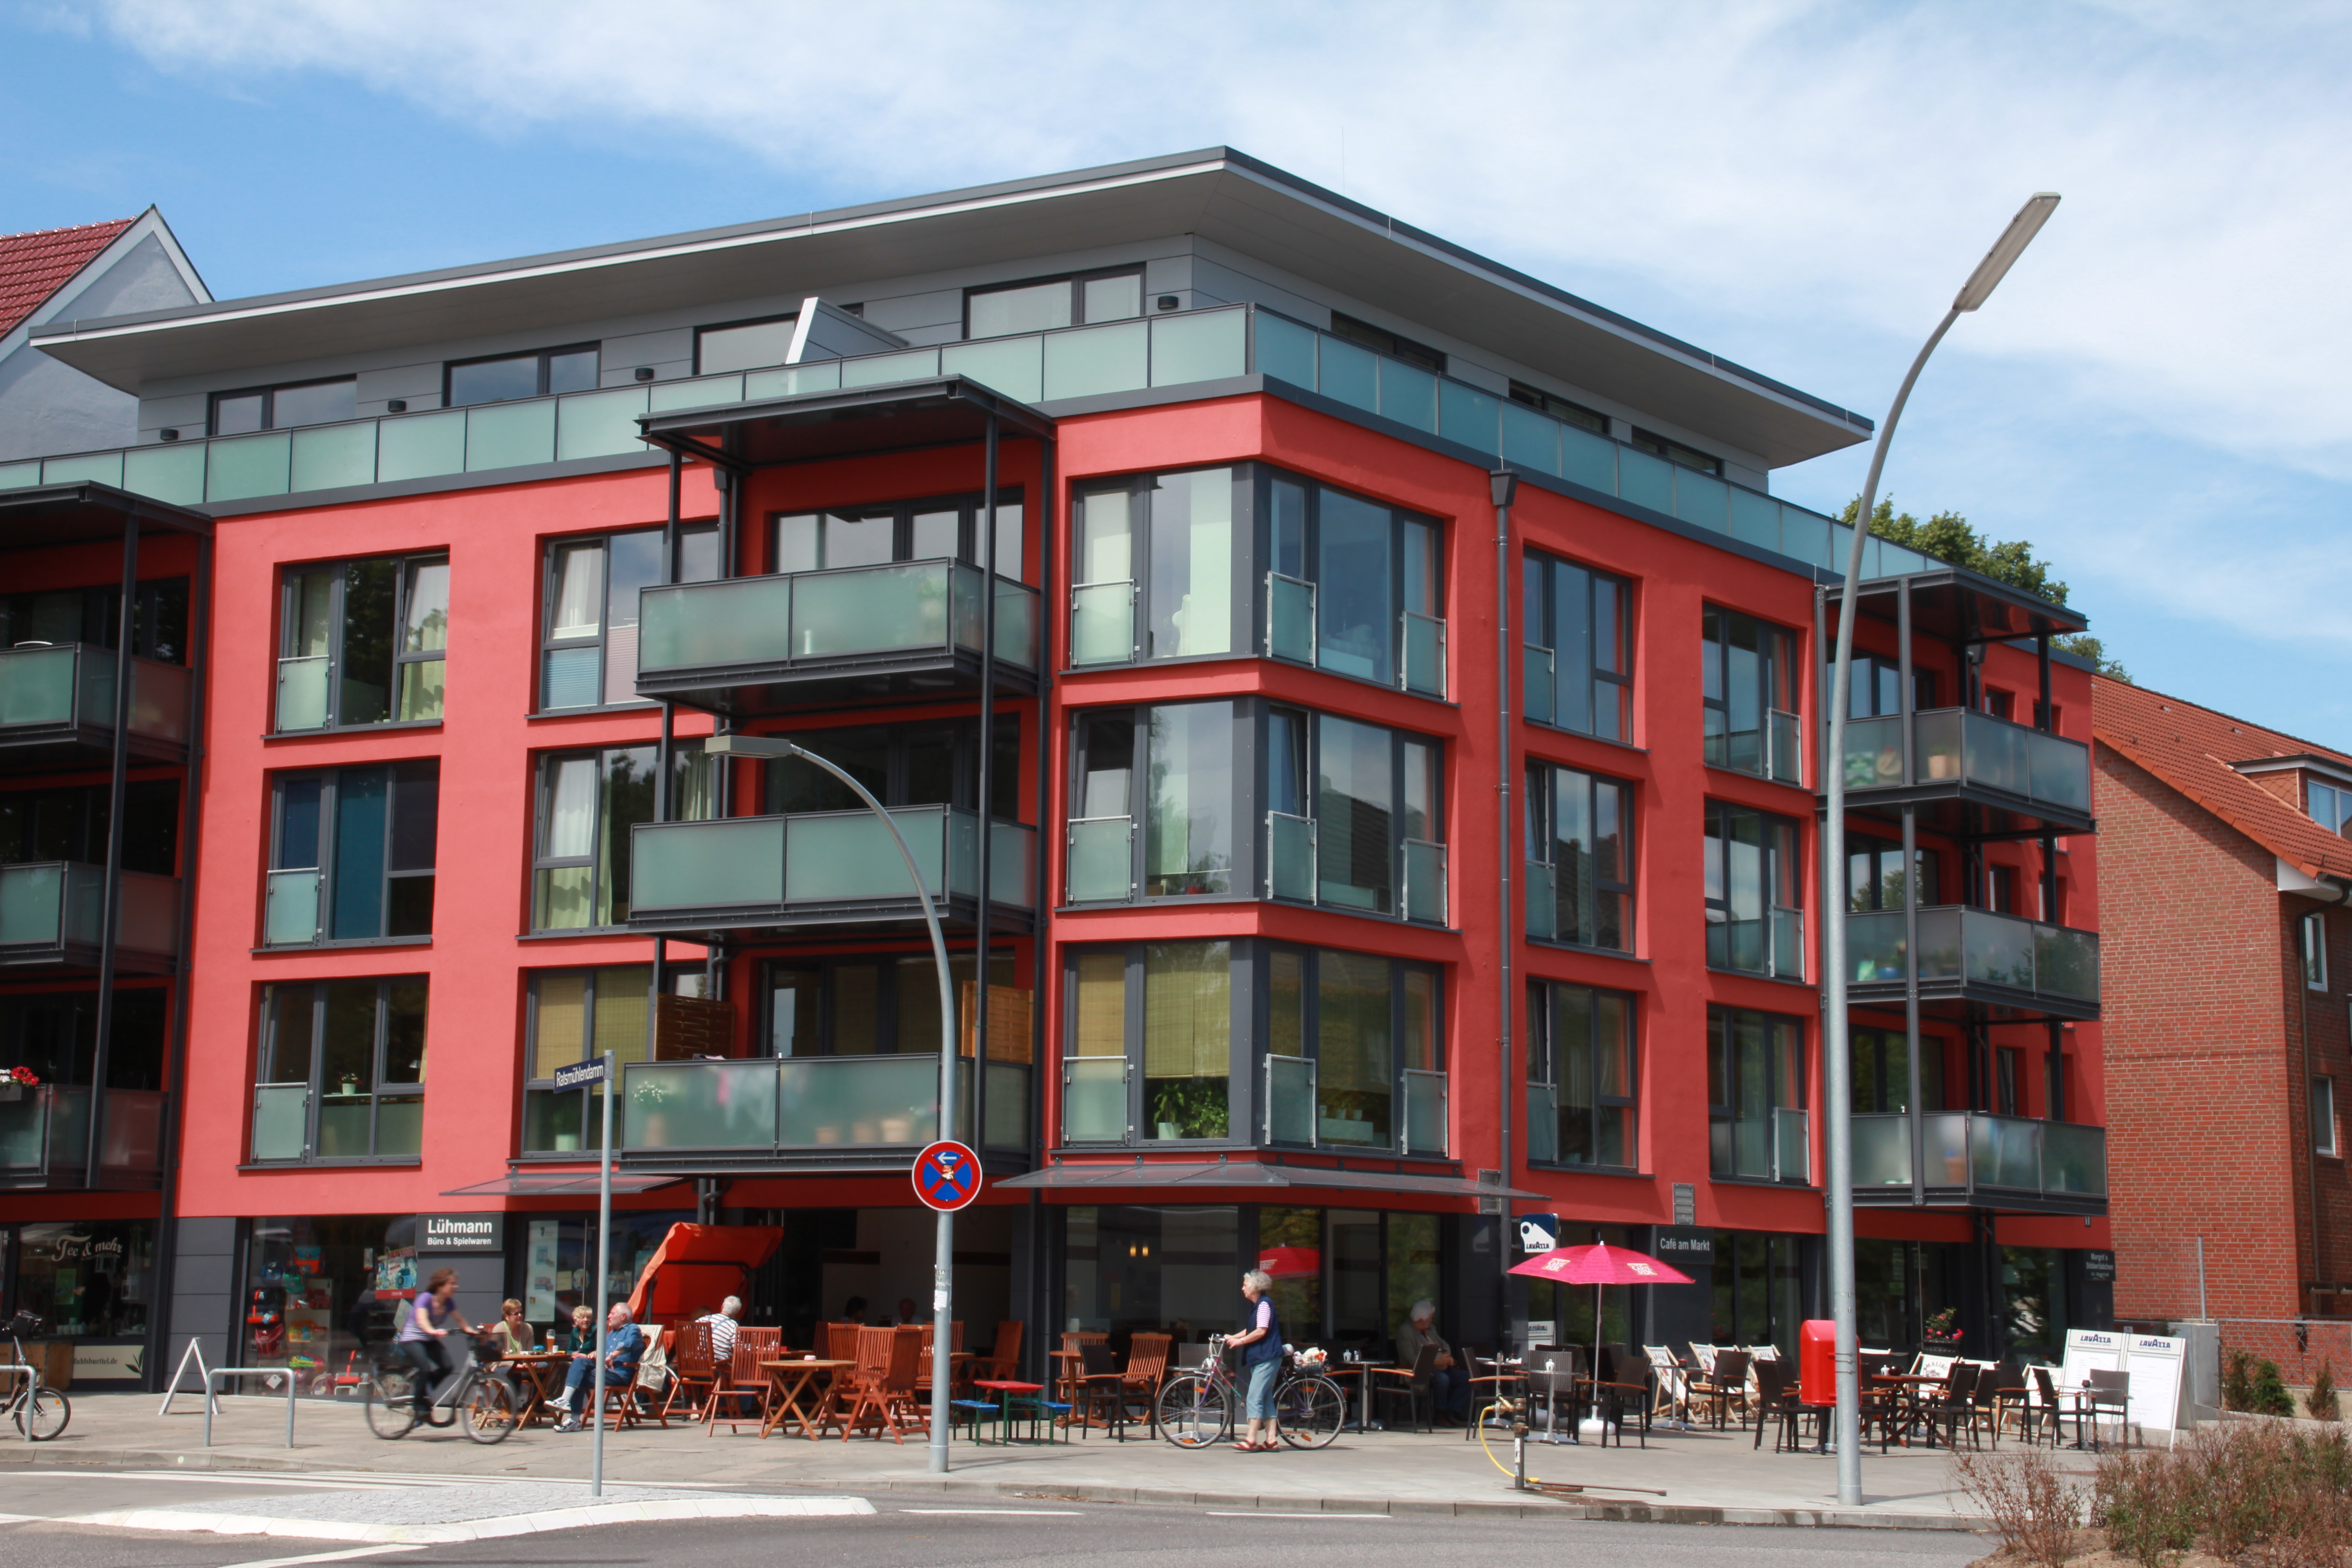 Complex apartamente - Renovare in perspectiva economisirii de energie Hamburg - Germania - Arhitectii prefera tot